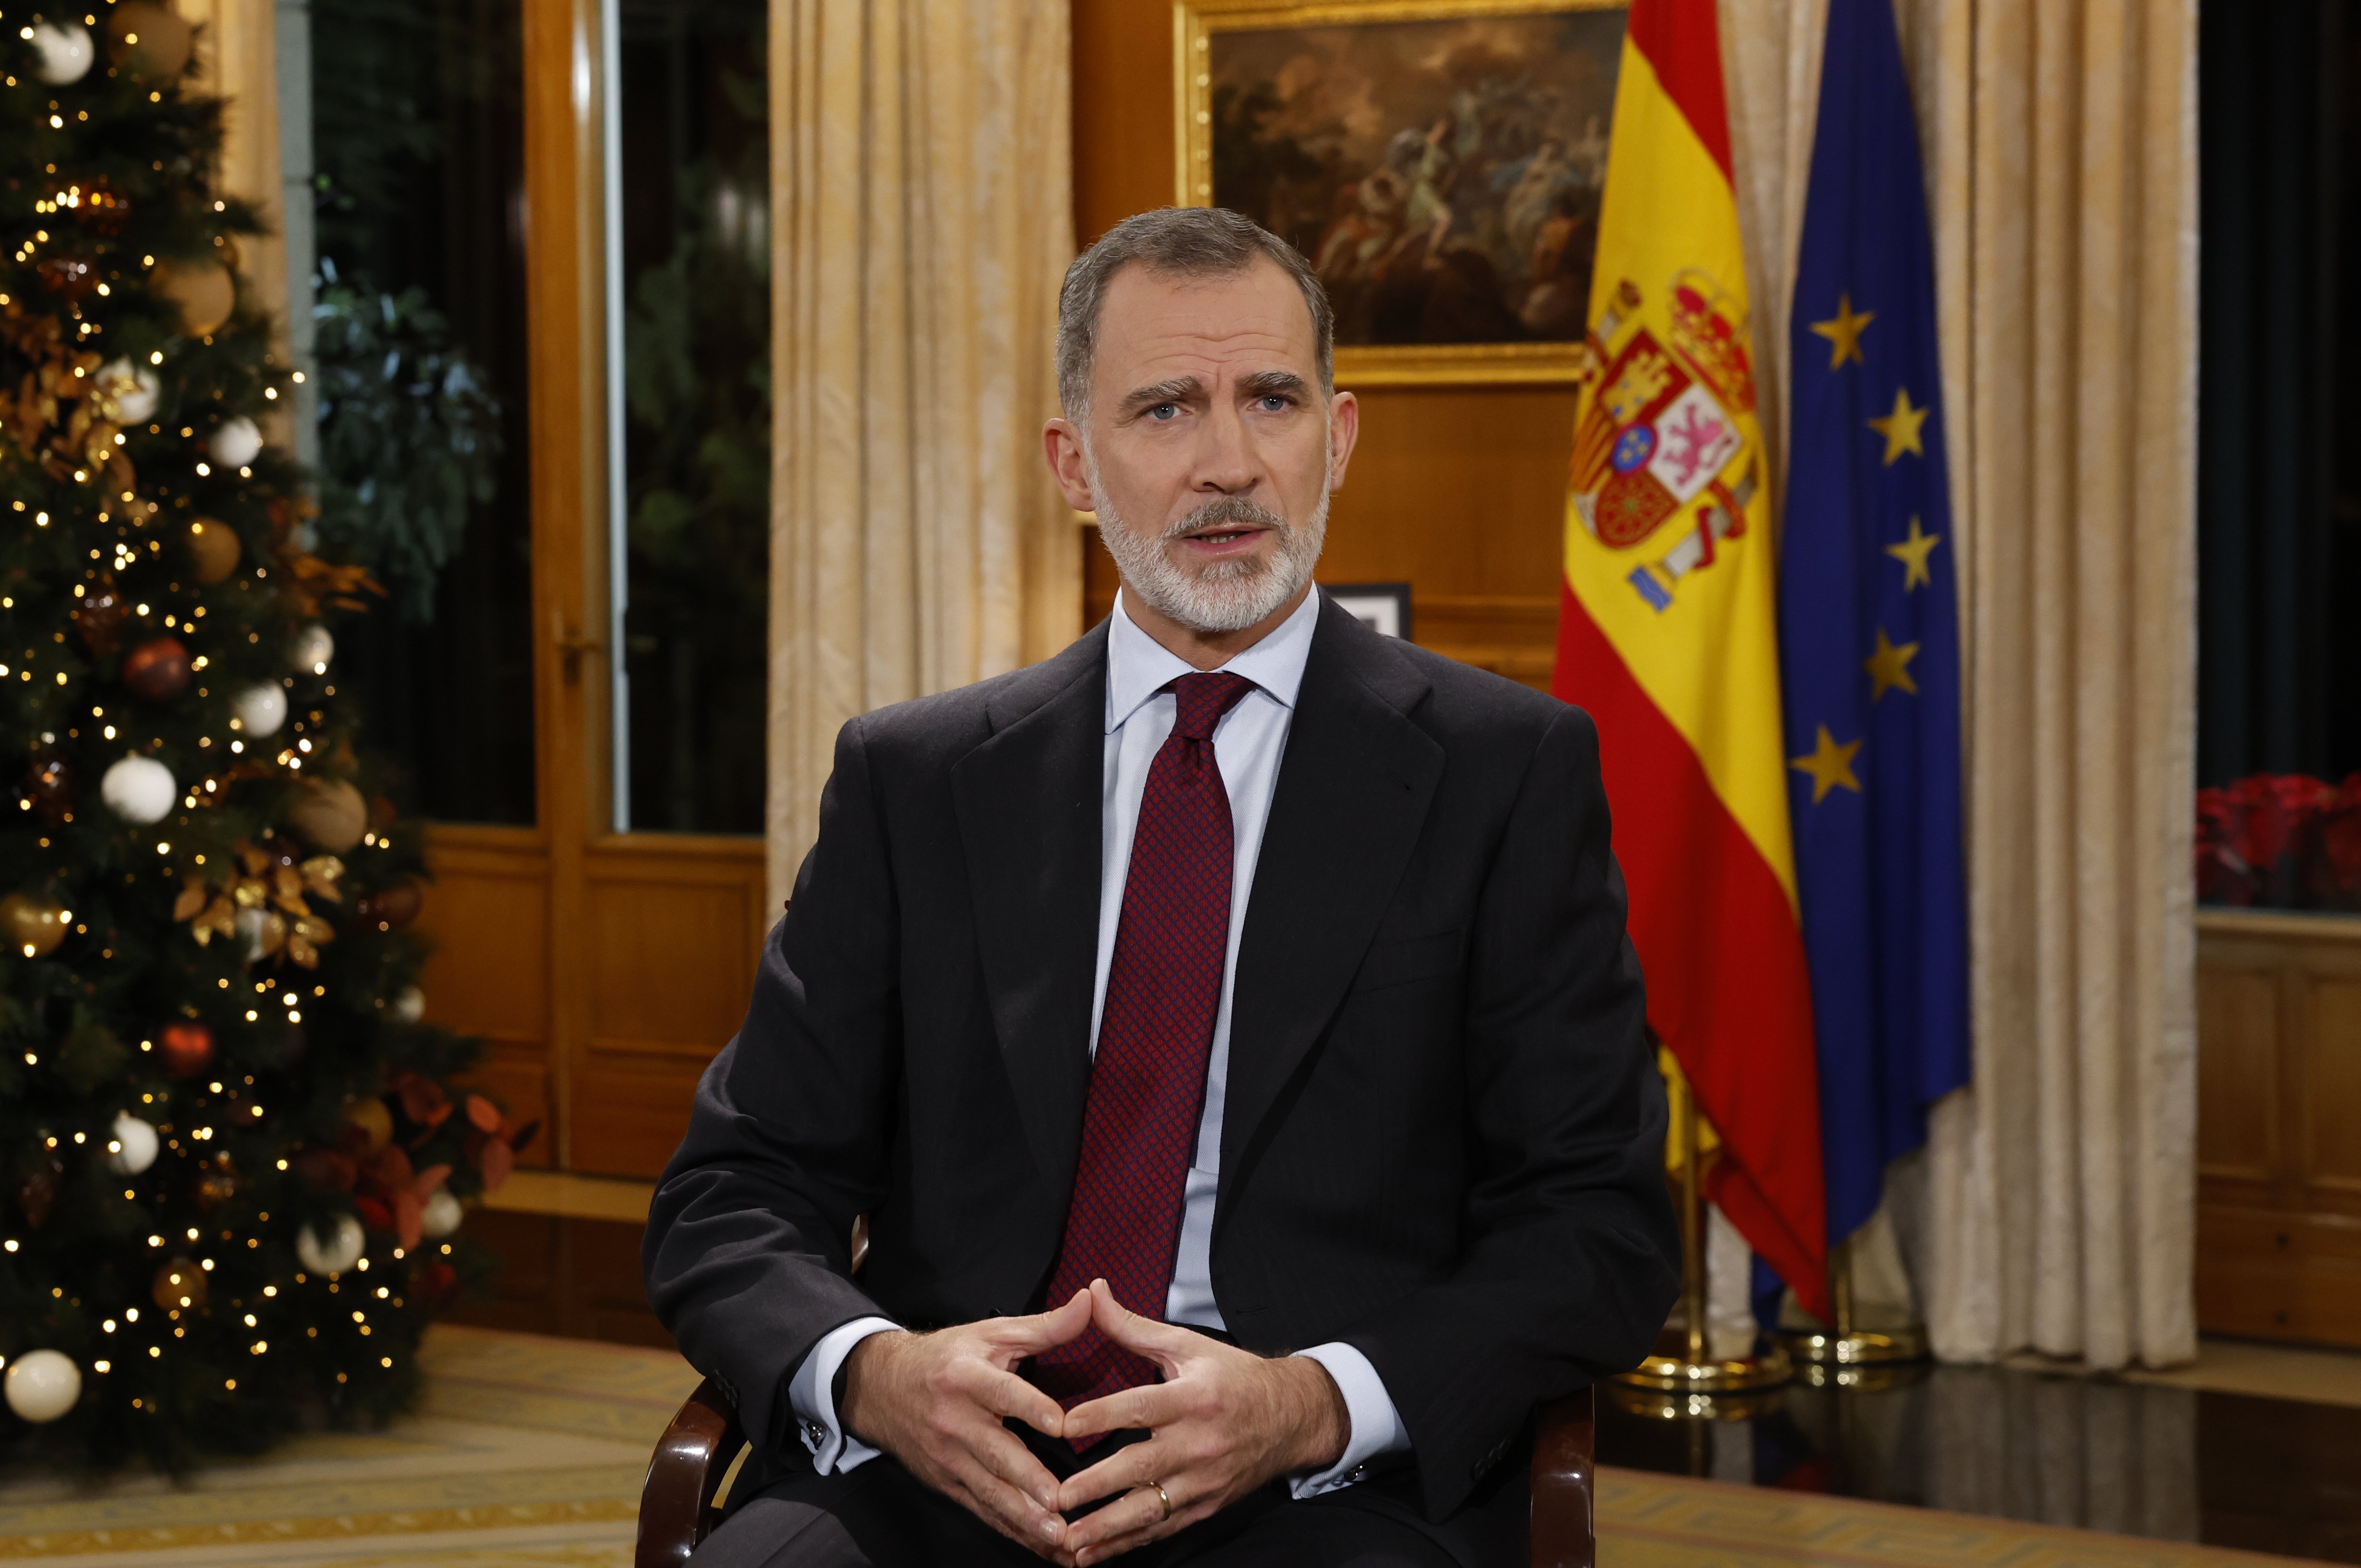 Spanish king warns of institutional "erosion" in Christmas speech addressing crisis